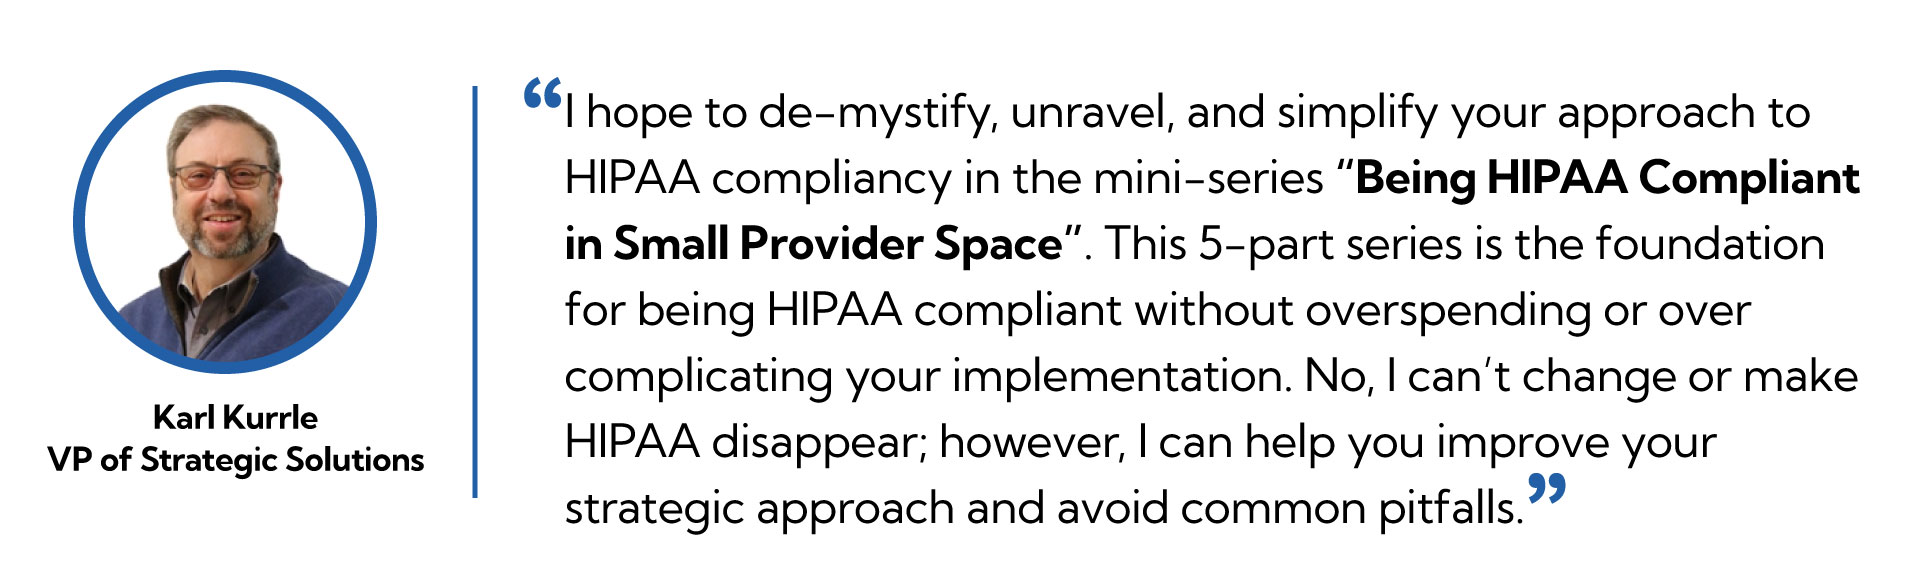 HIPAA Challenges and Pitfalls